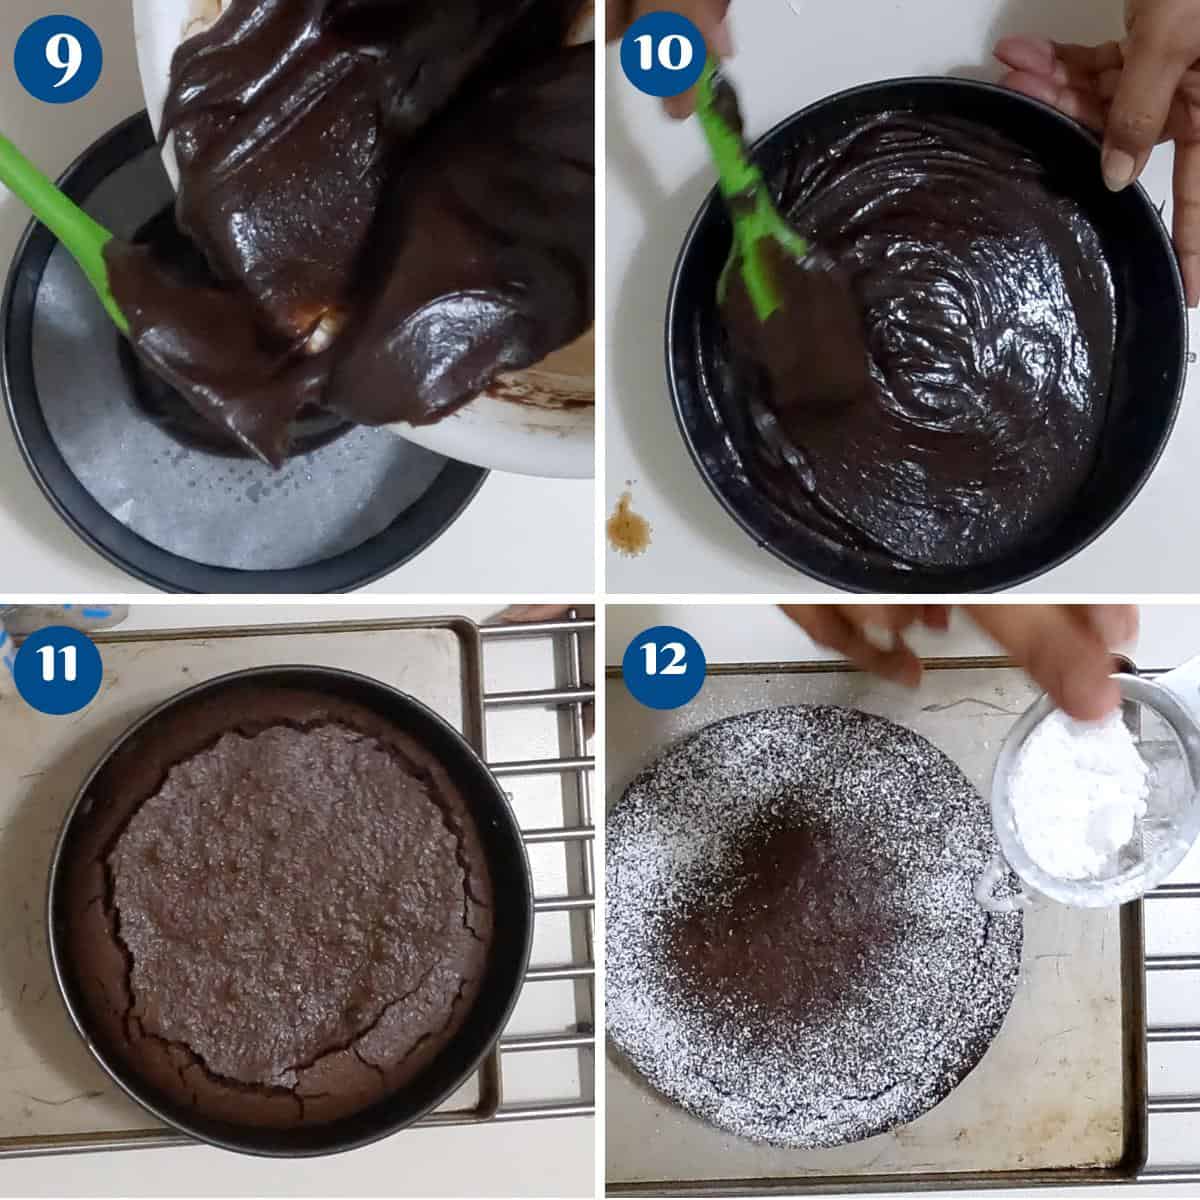 Progress pictures making chocolate torte.